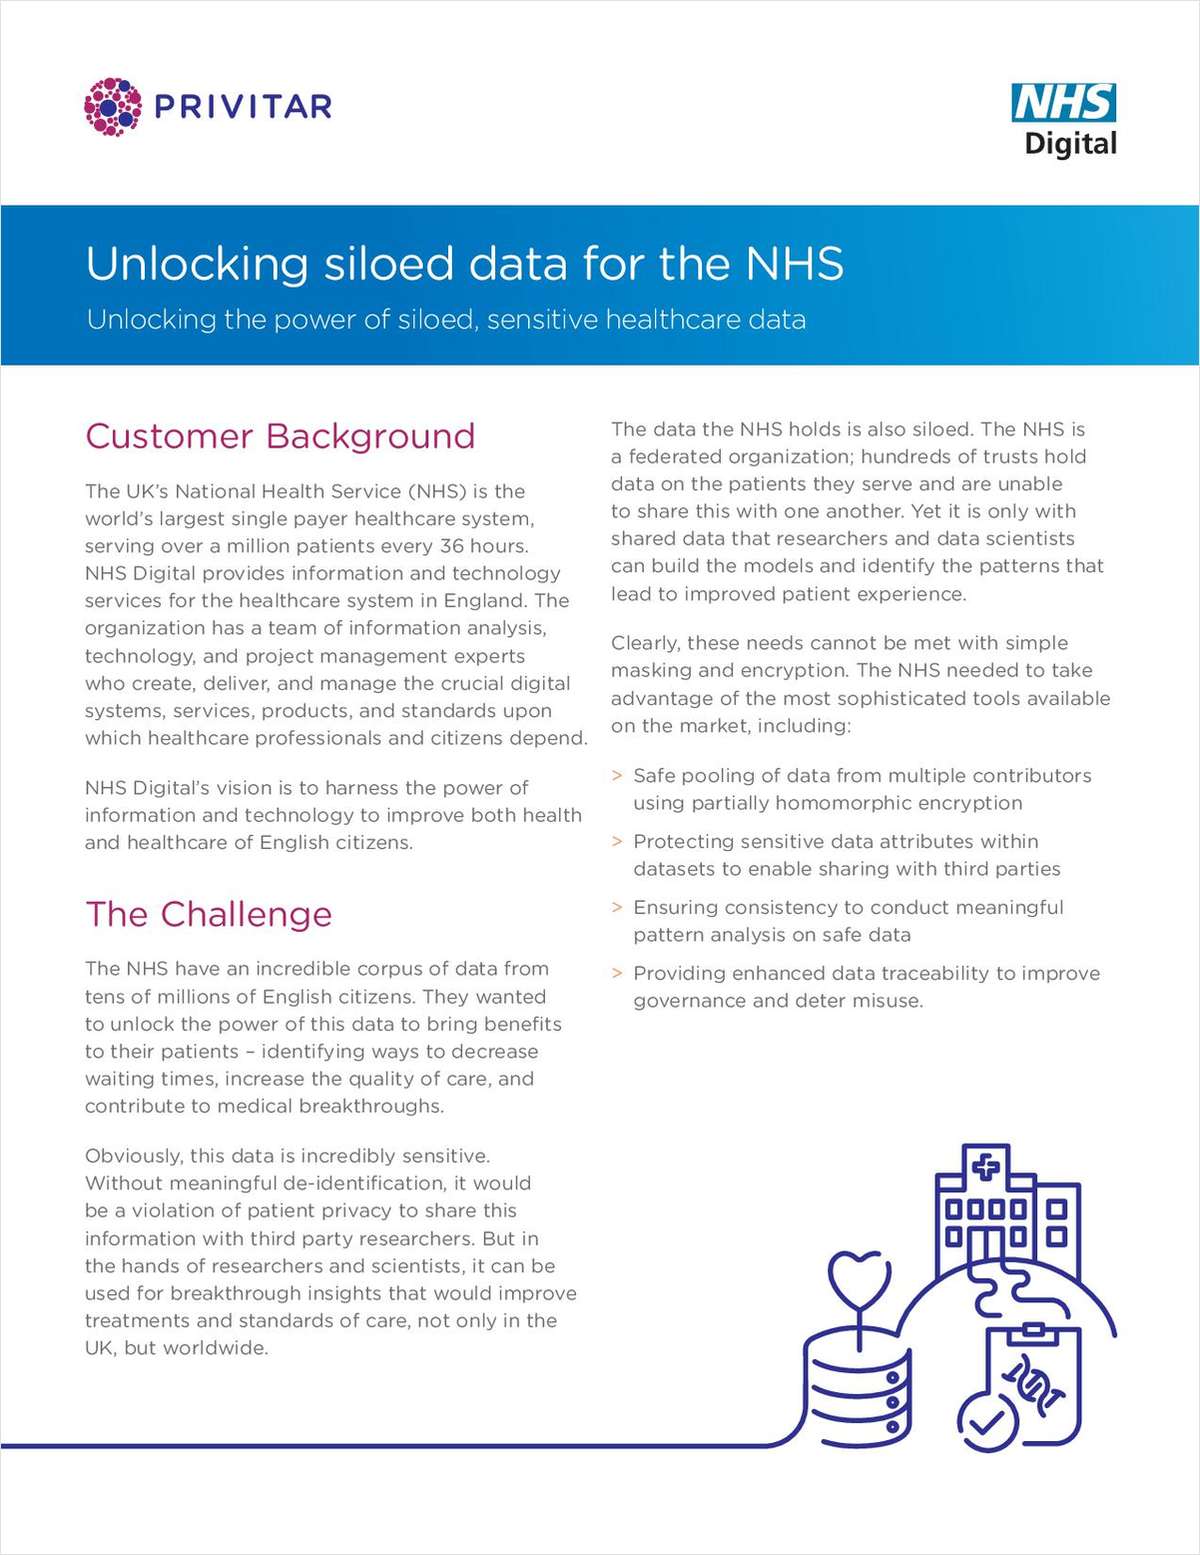 How NHS Digital unlocked the power of siloed, sensitive healthcare data